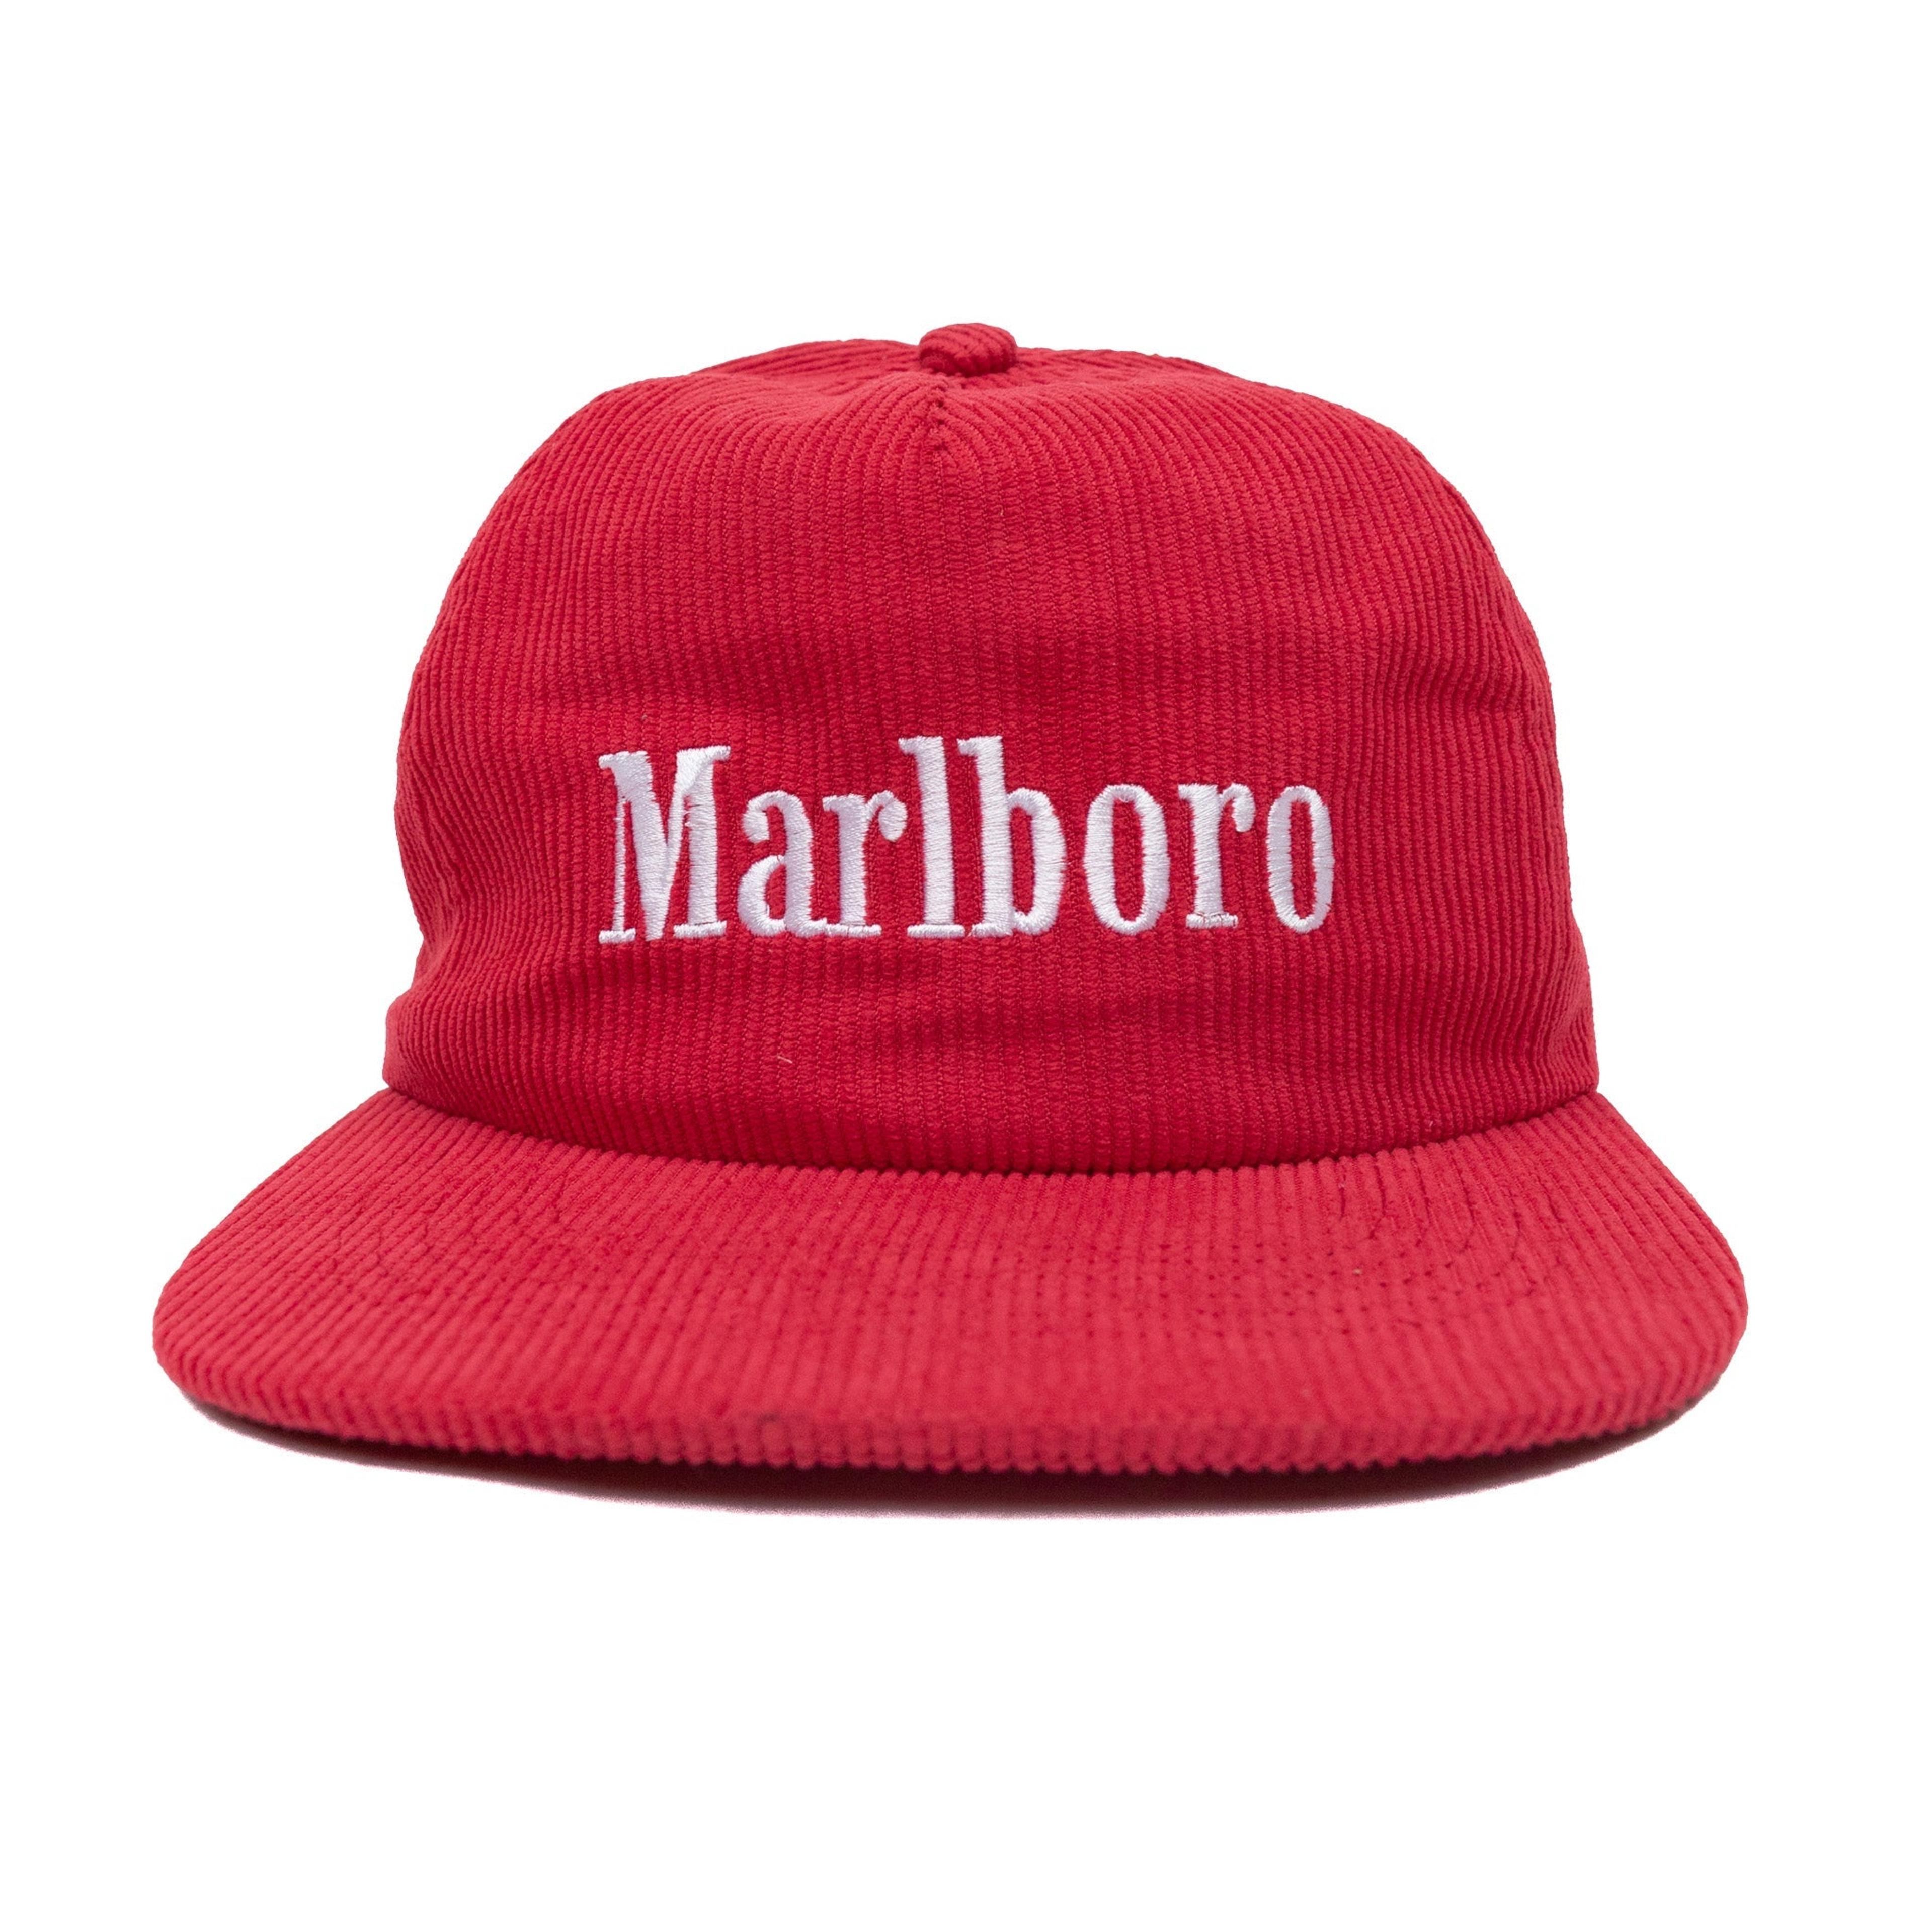 The Marlboro Cord Cap